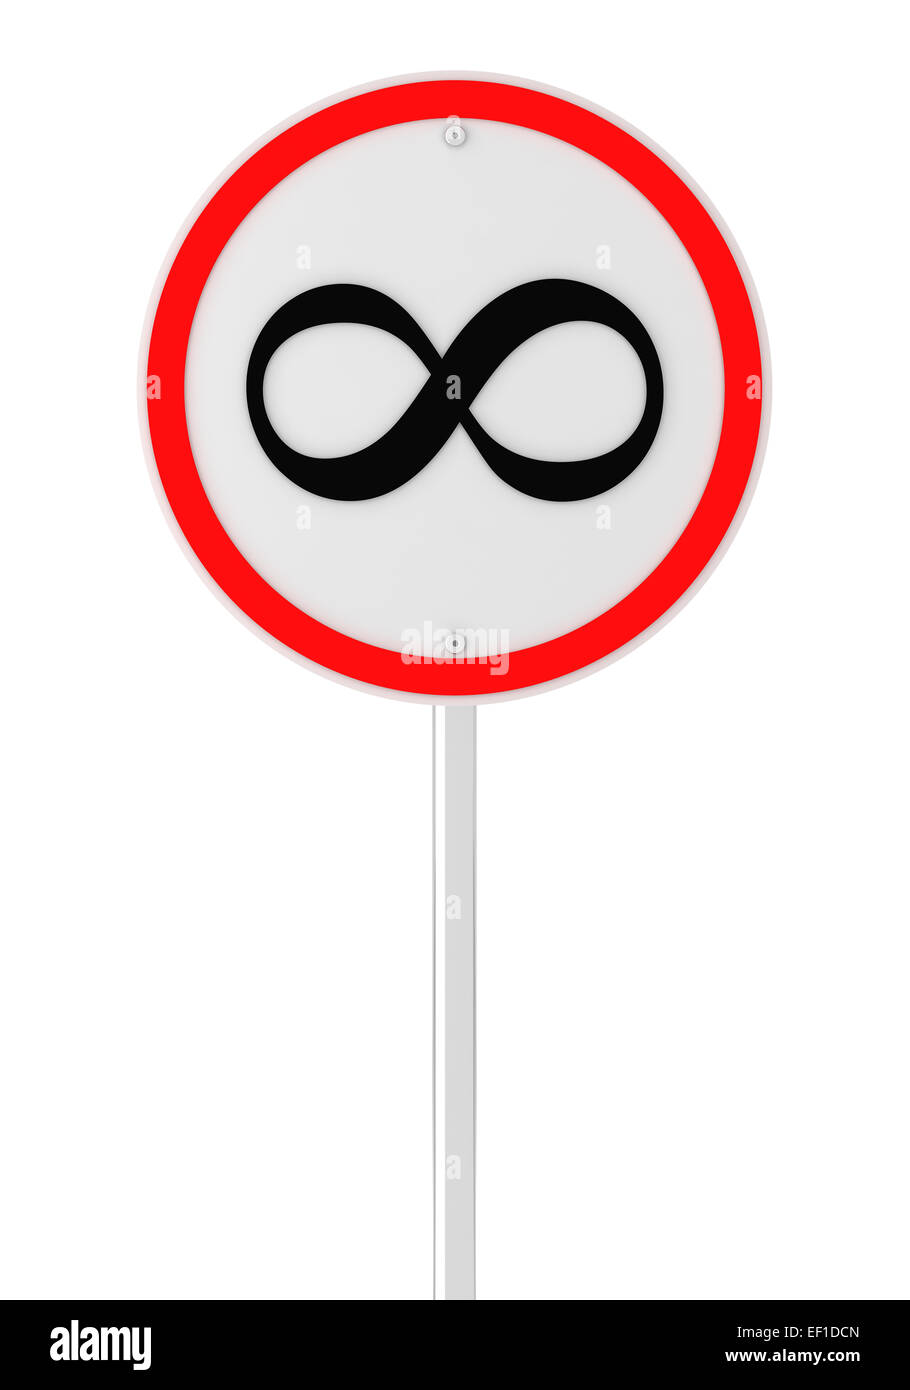 Vitesse infinie road sign Banque D'Images